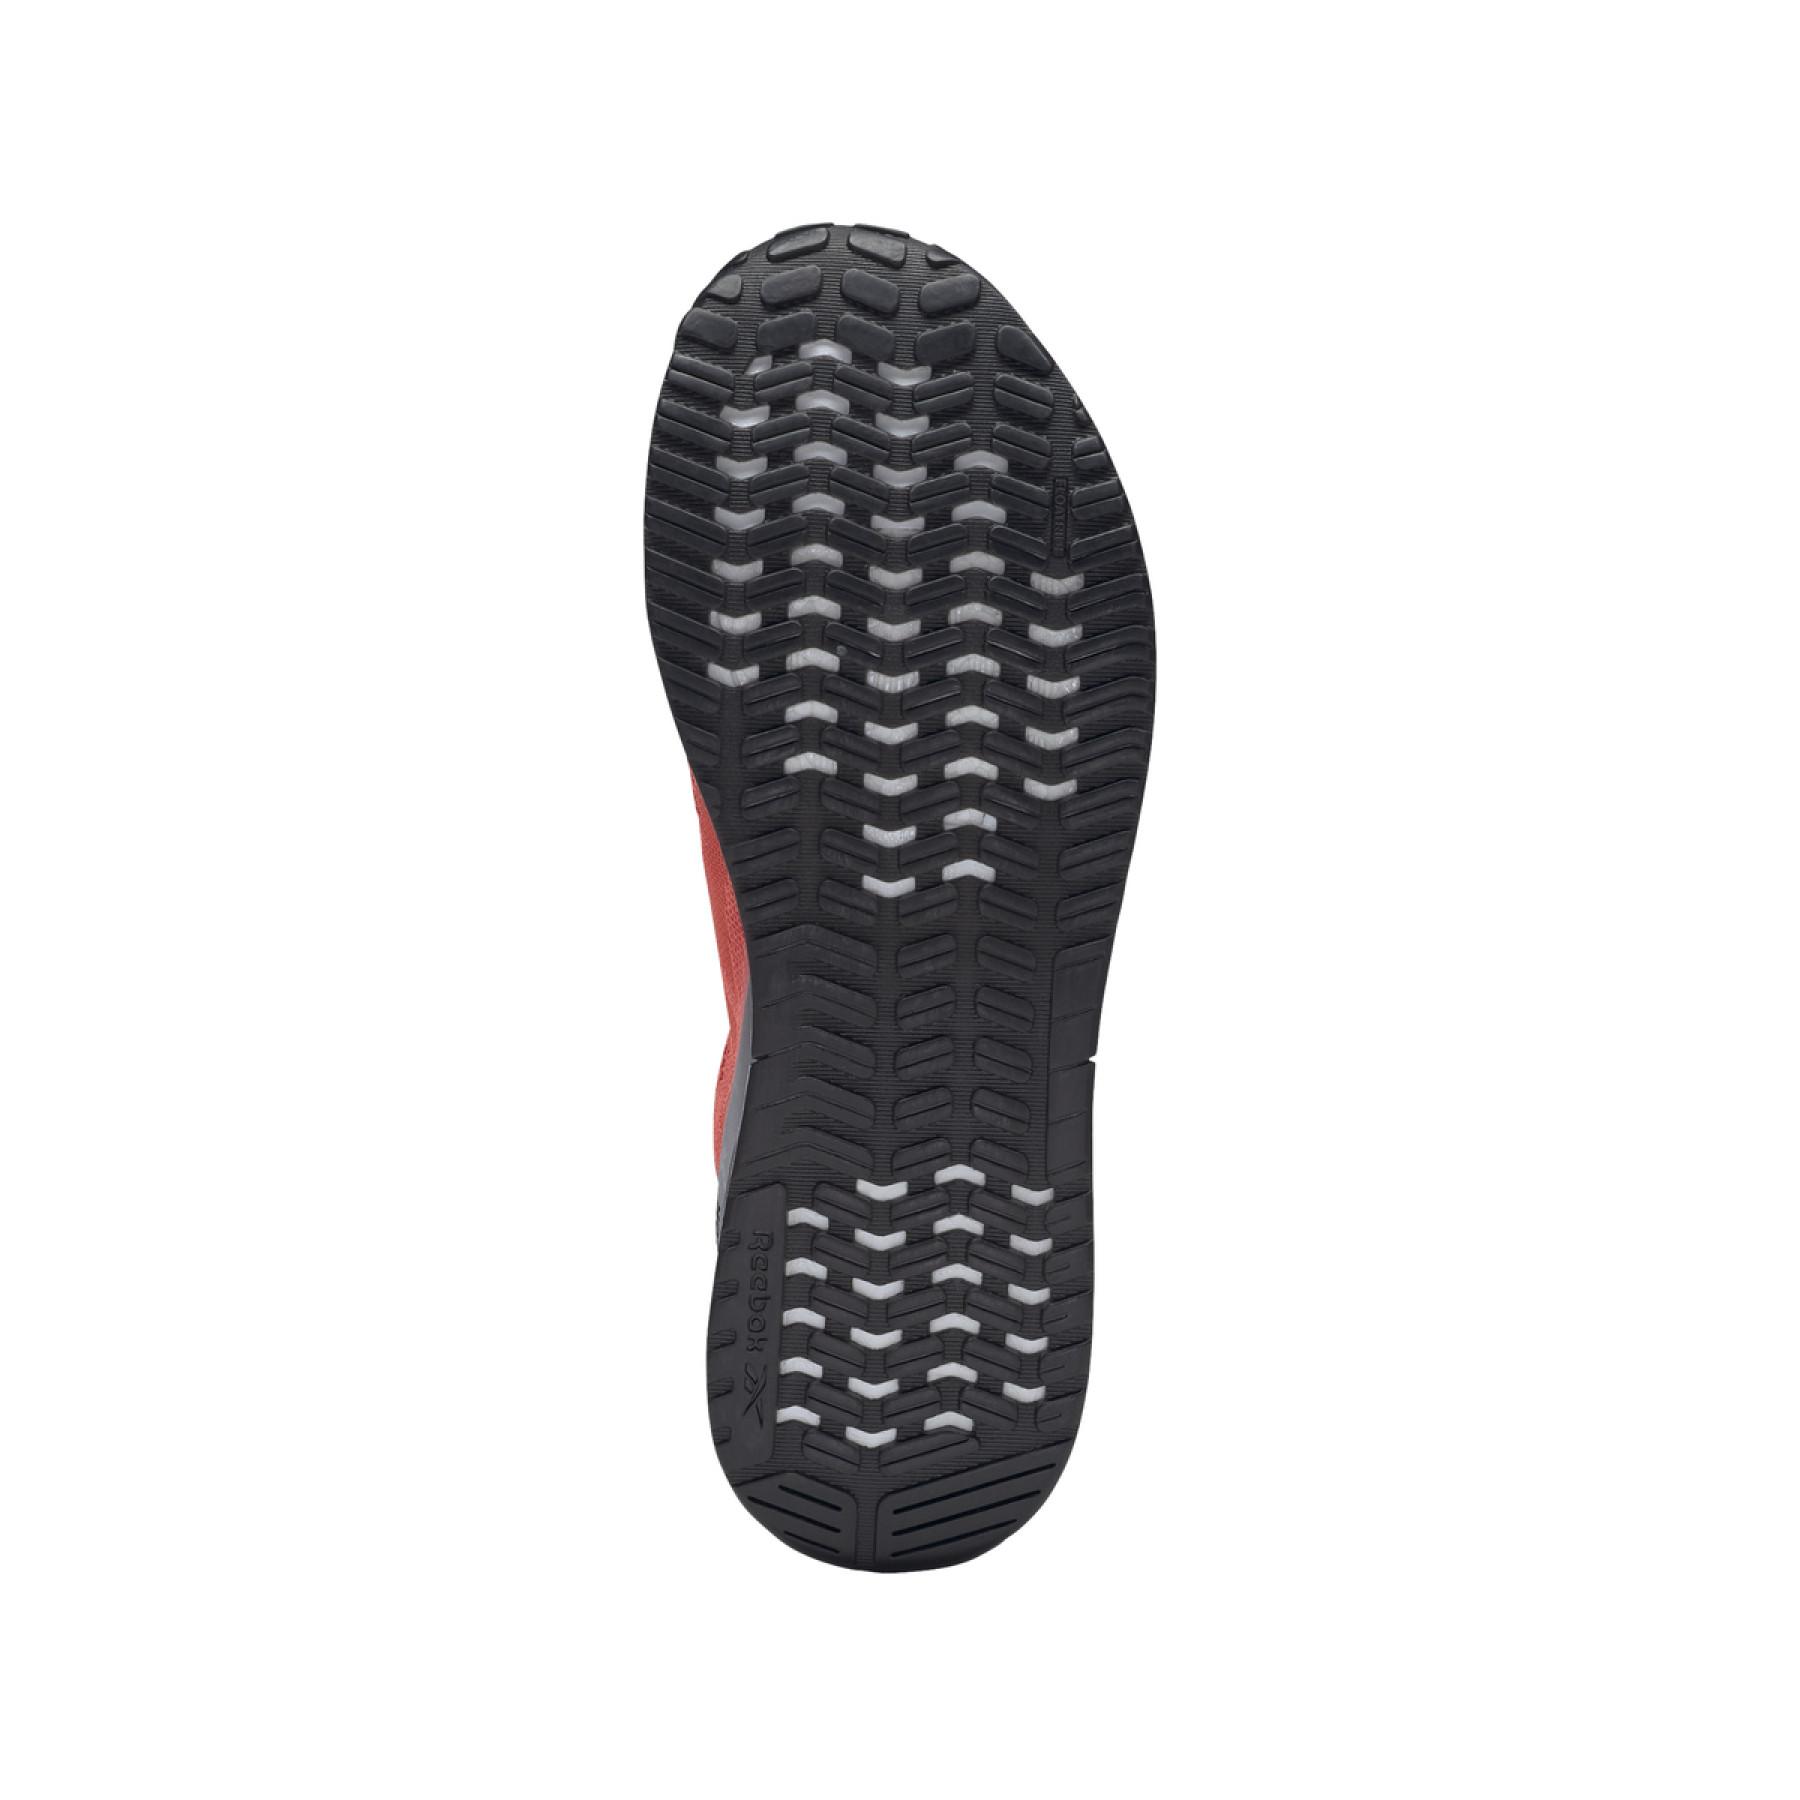 Schoenen Reebok Nano X1